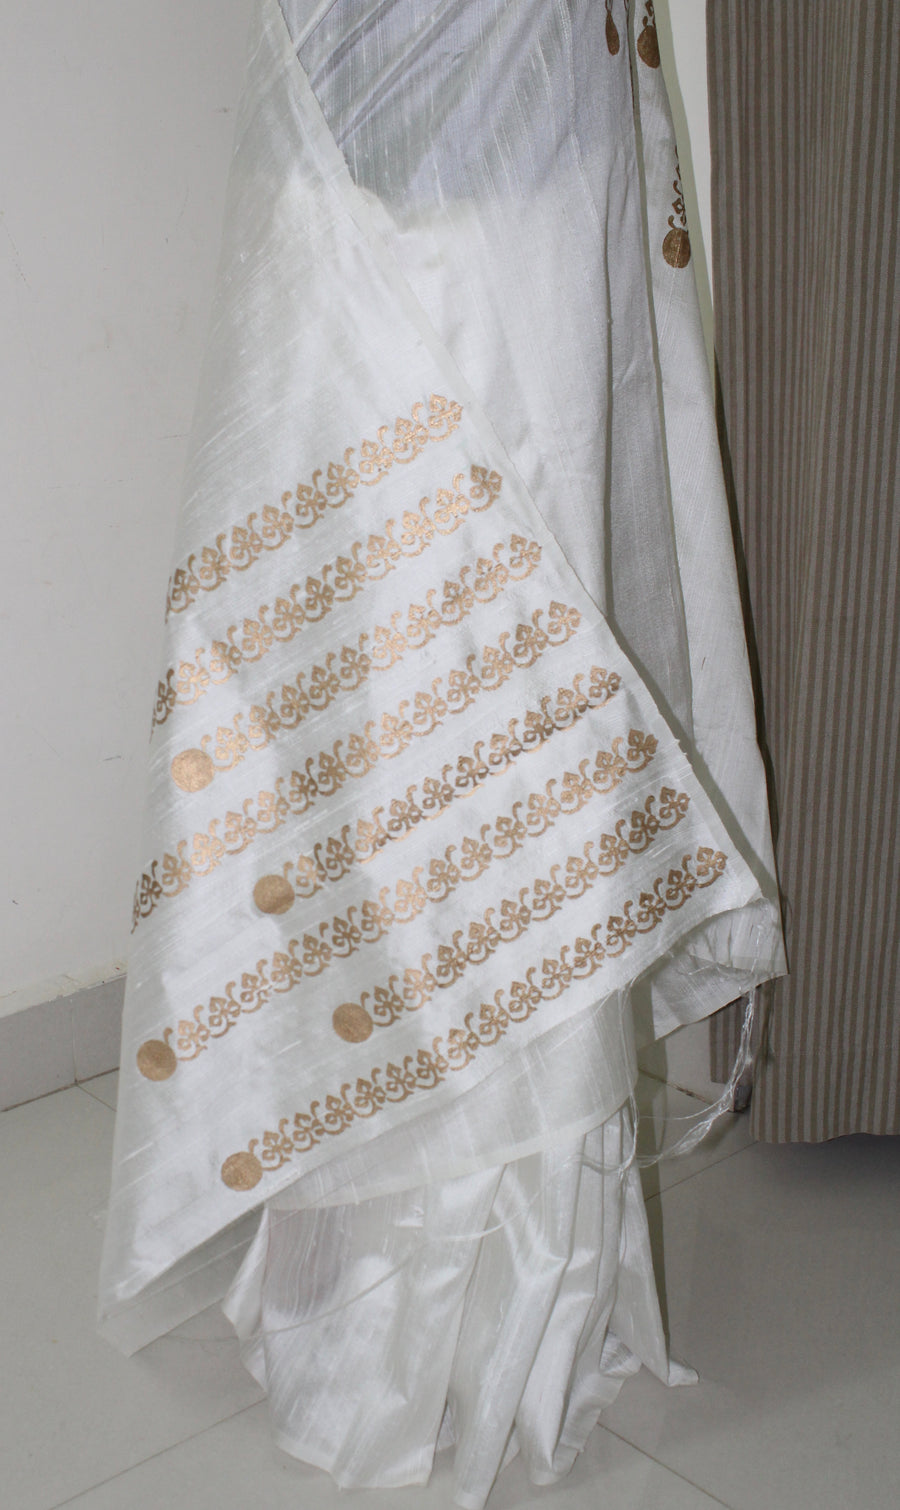 Dupion pure raw silk saree with block print